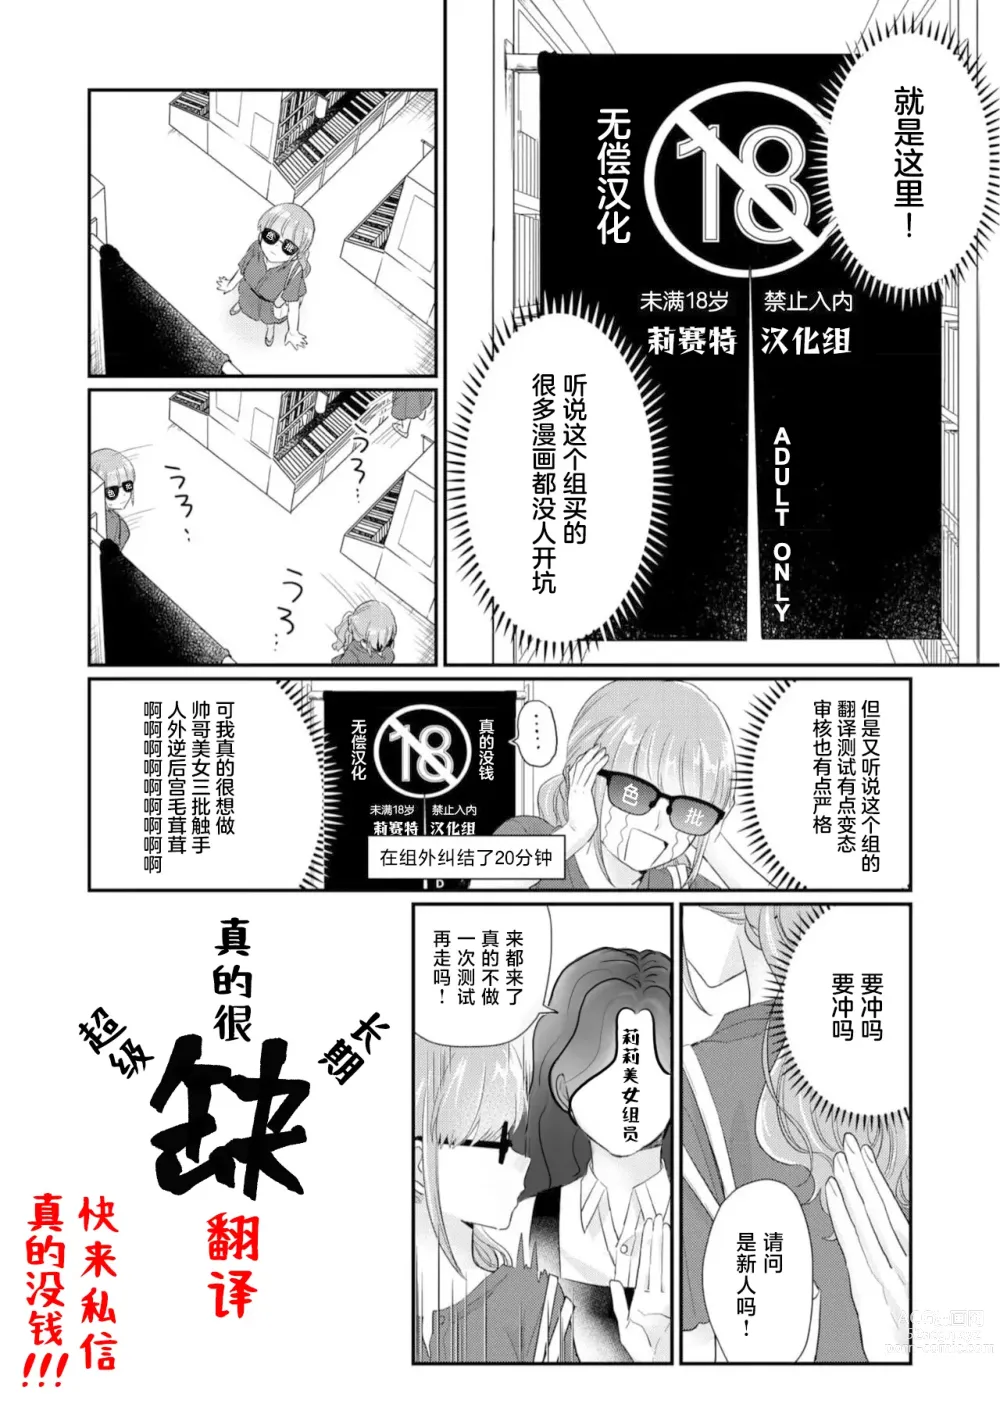 Page 42 of manga 怀旧浪漫谭•替身新娘嫁对制服郎